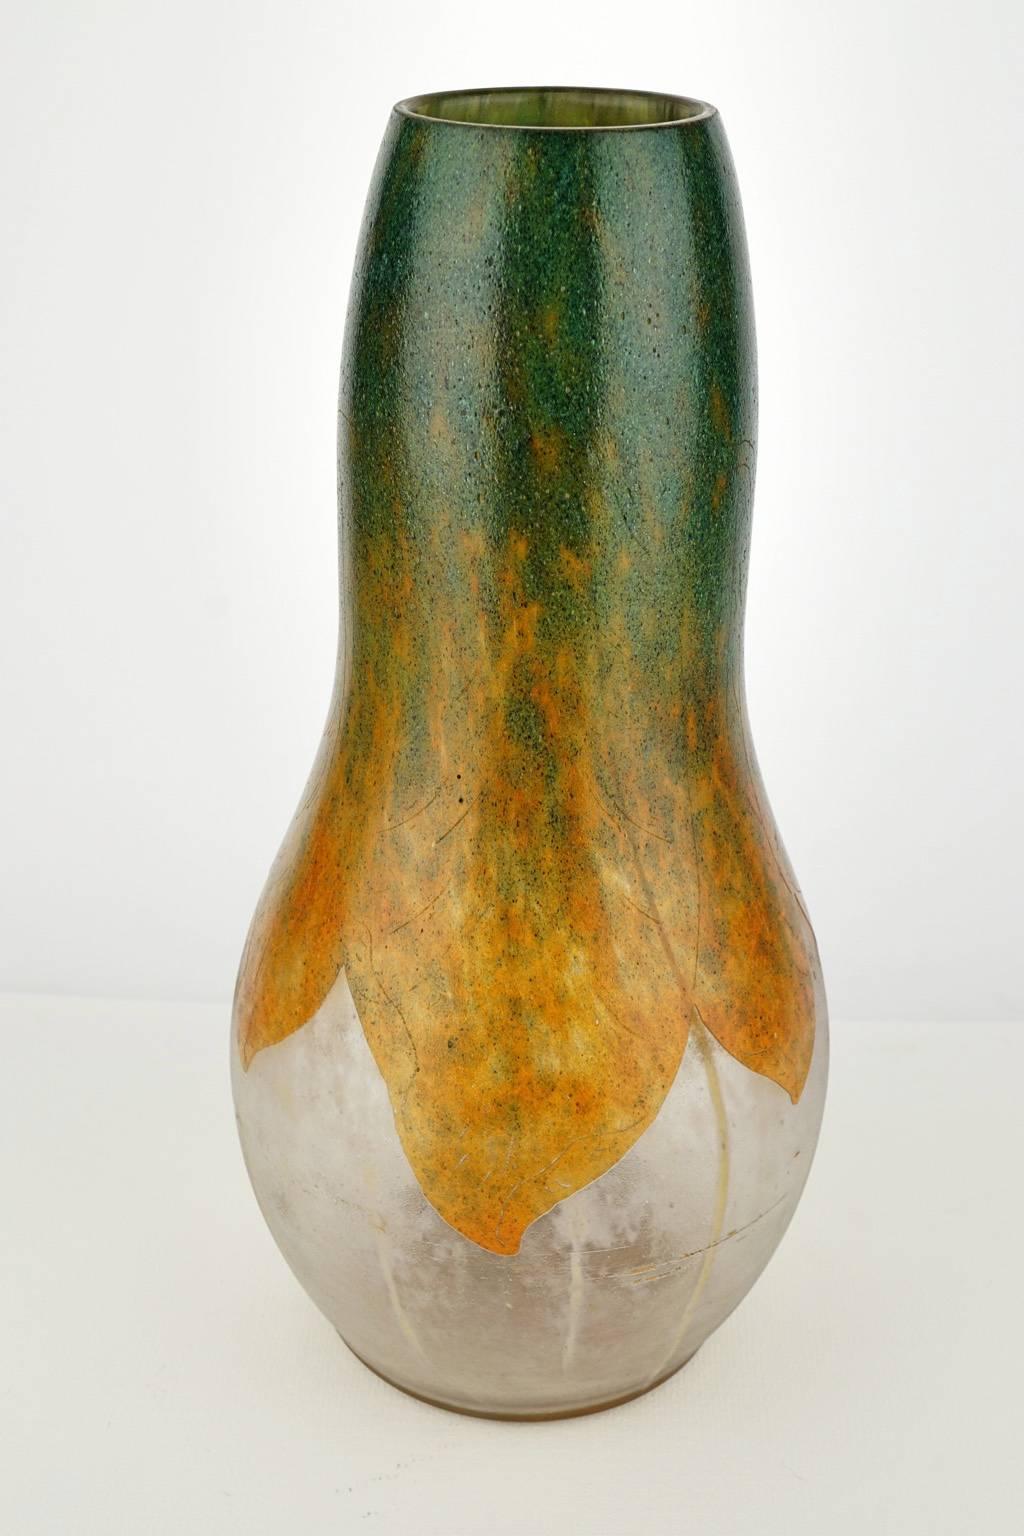 Art Deco Charles Schneider green and orange marbled glass vase. Design “tobacco leaves”.
 